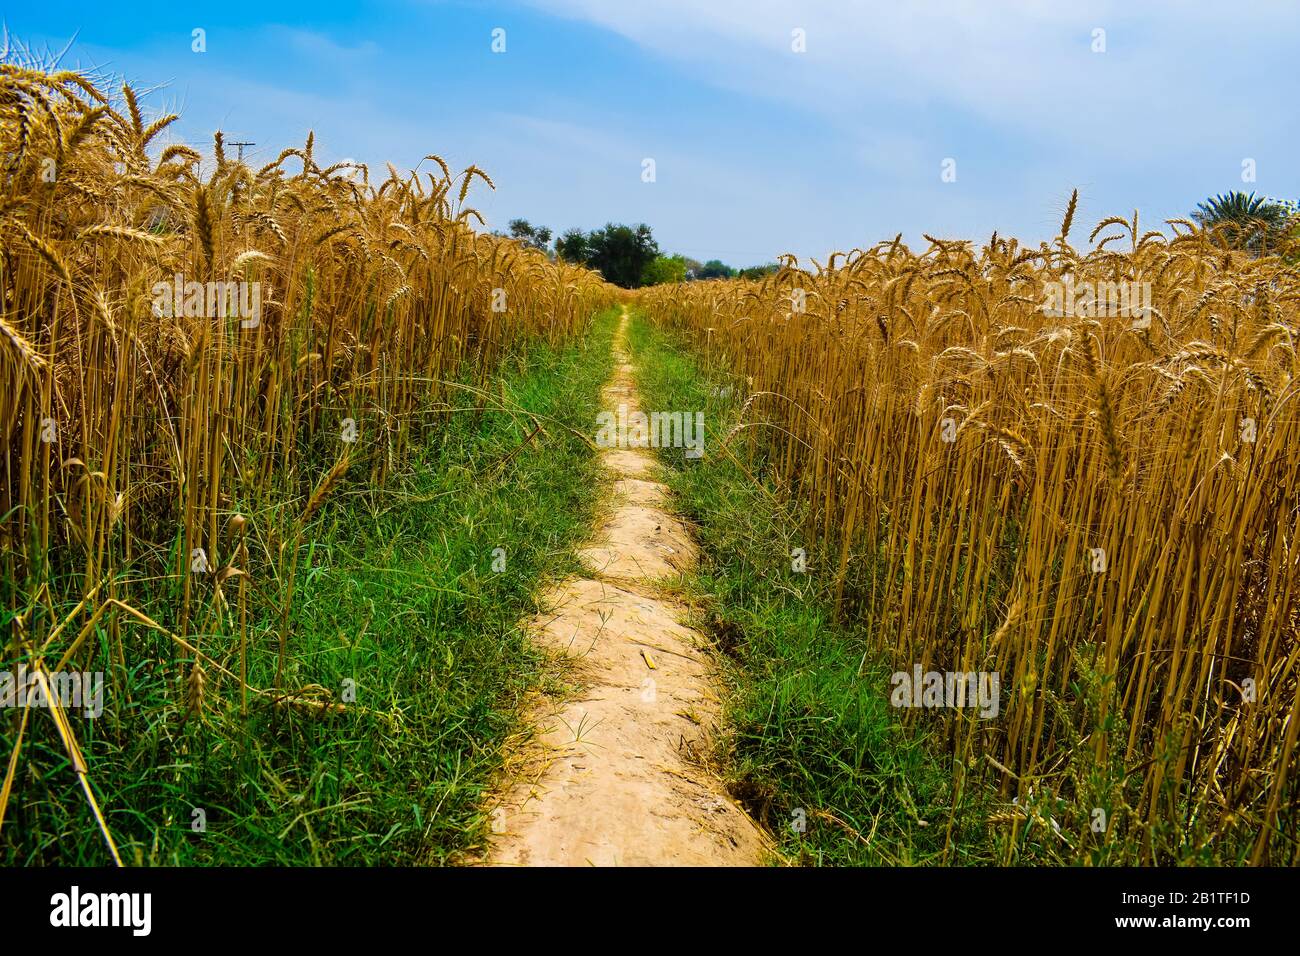 Beautiful rural landscape image of wheat field.Golden crop (wheat) ready to crop,Punjab,Pakistan.Blue sky background. Stock Photo